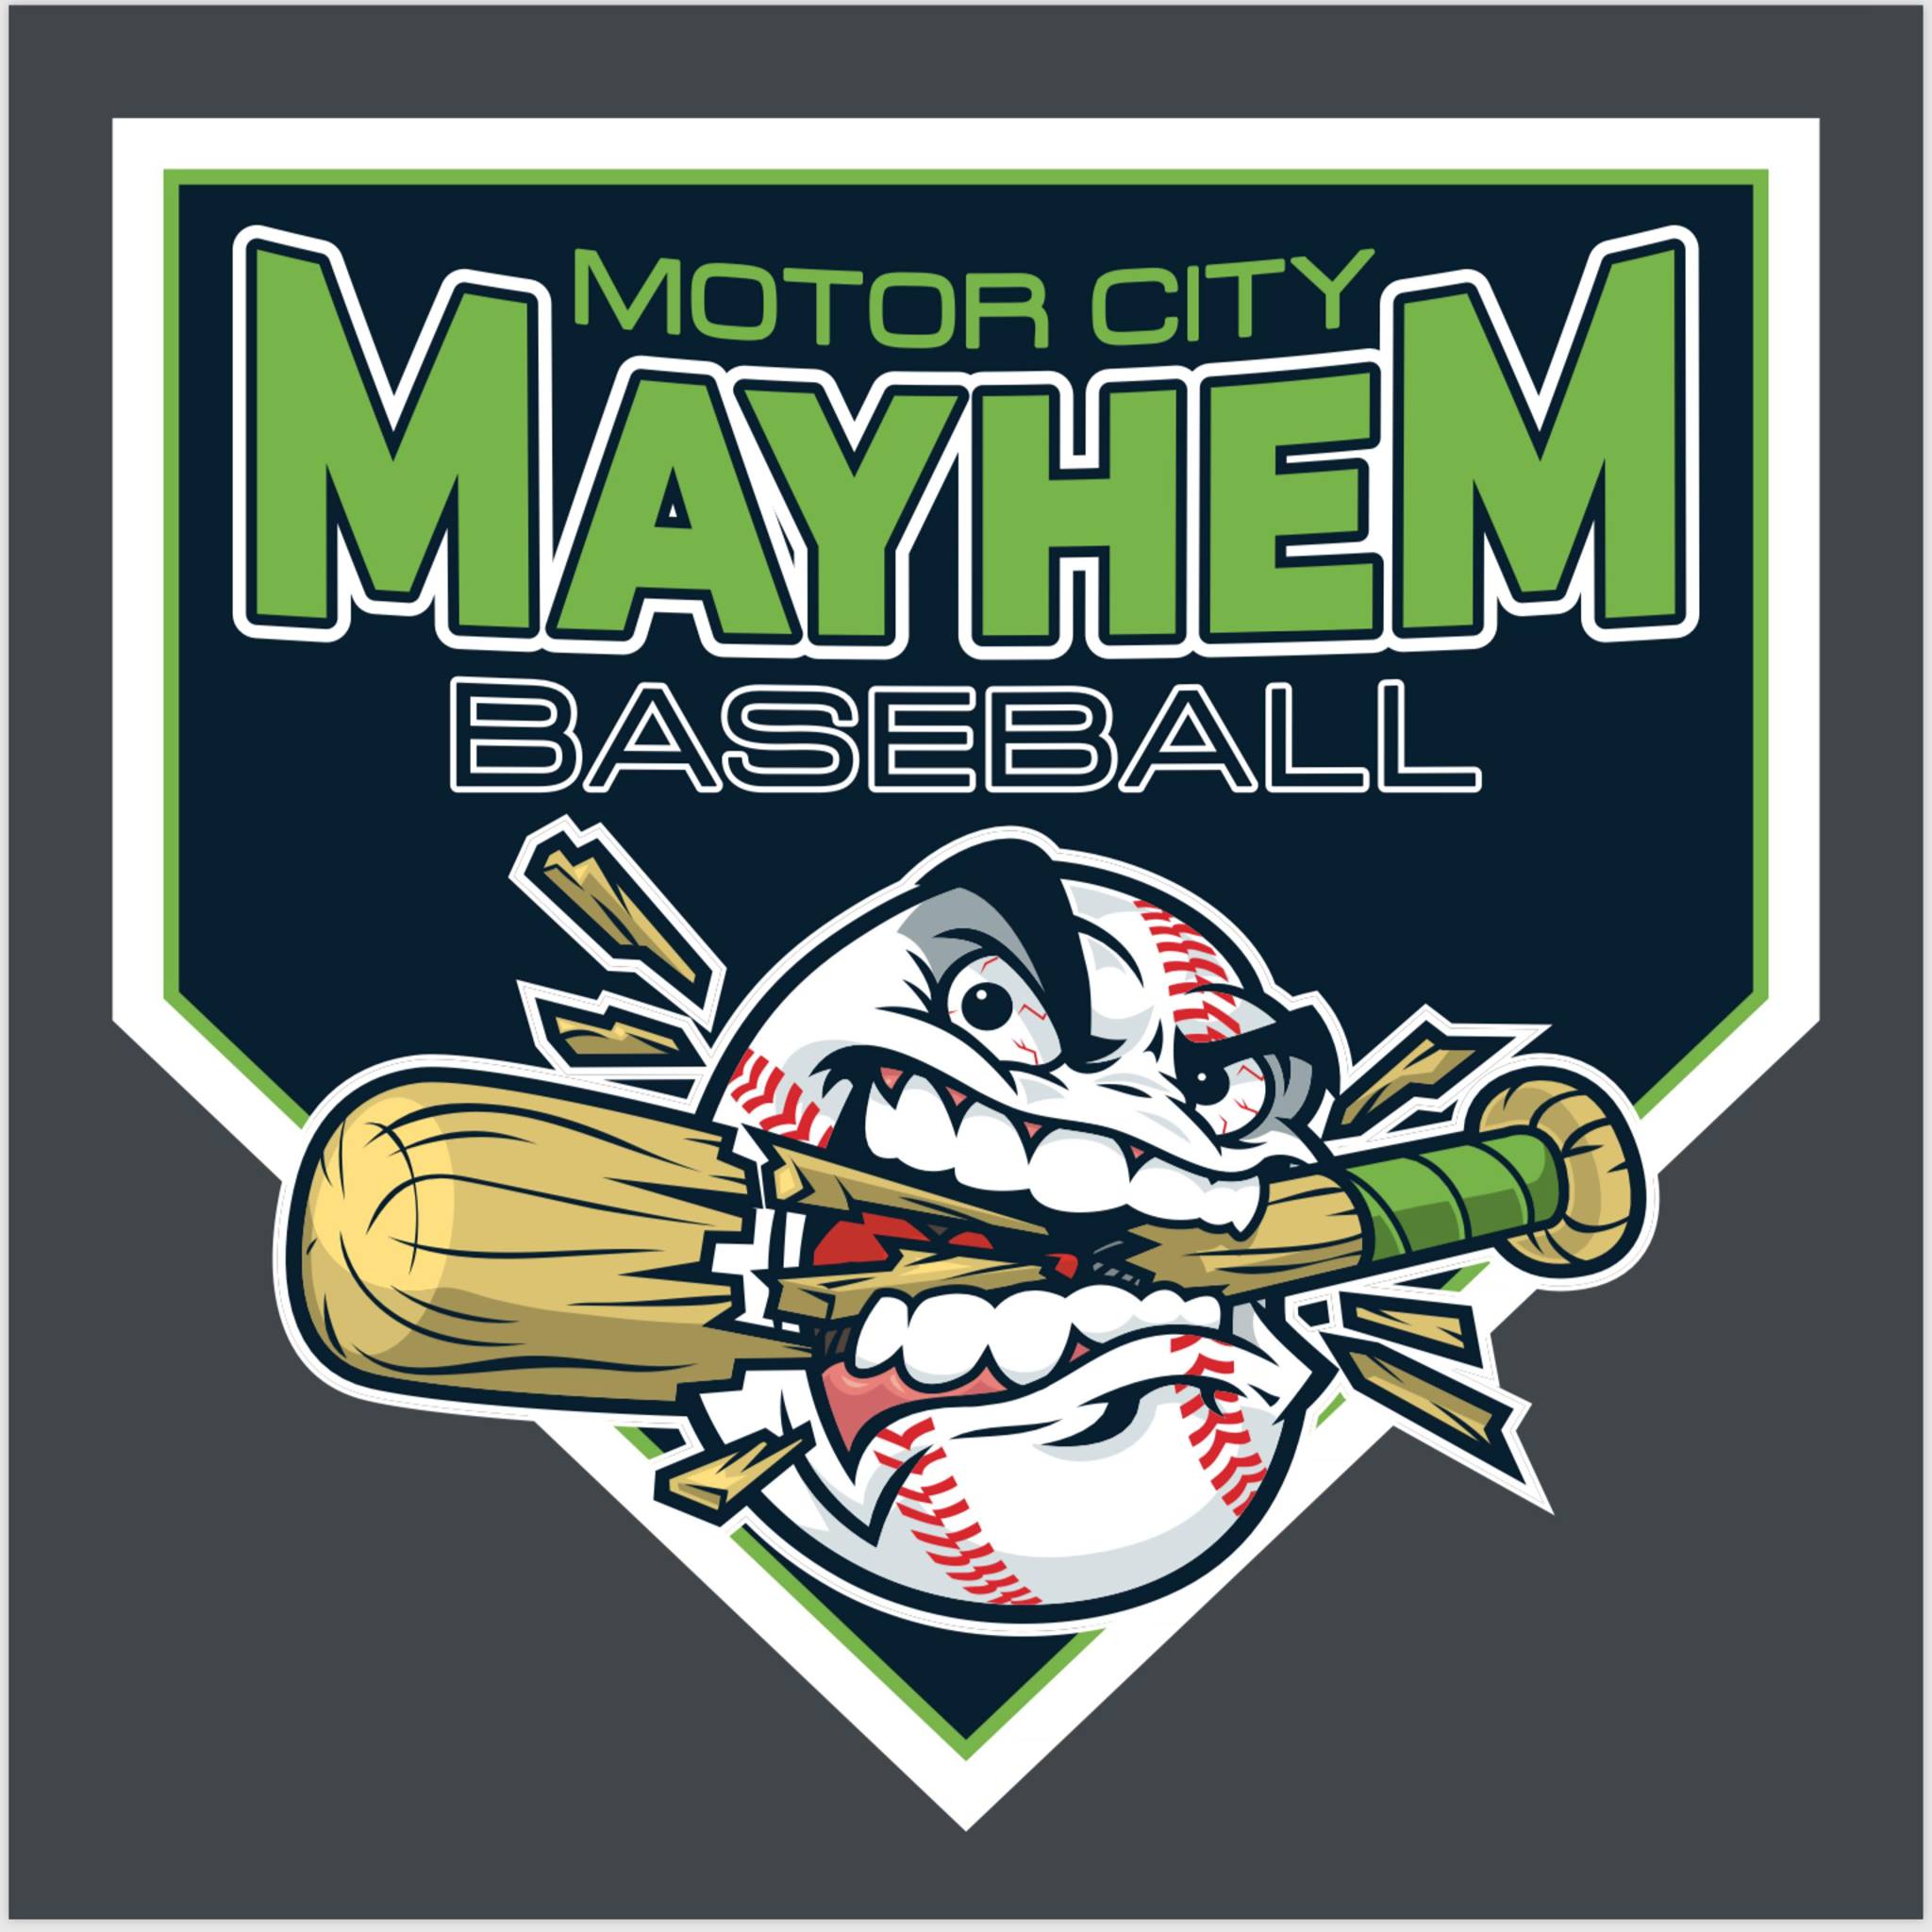 Motor City Mayhem Travel Baseball Team Monroe Michigan BaseballConnected